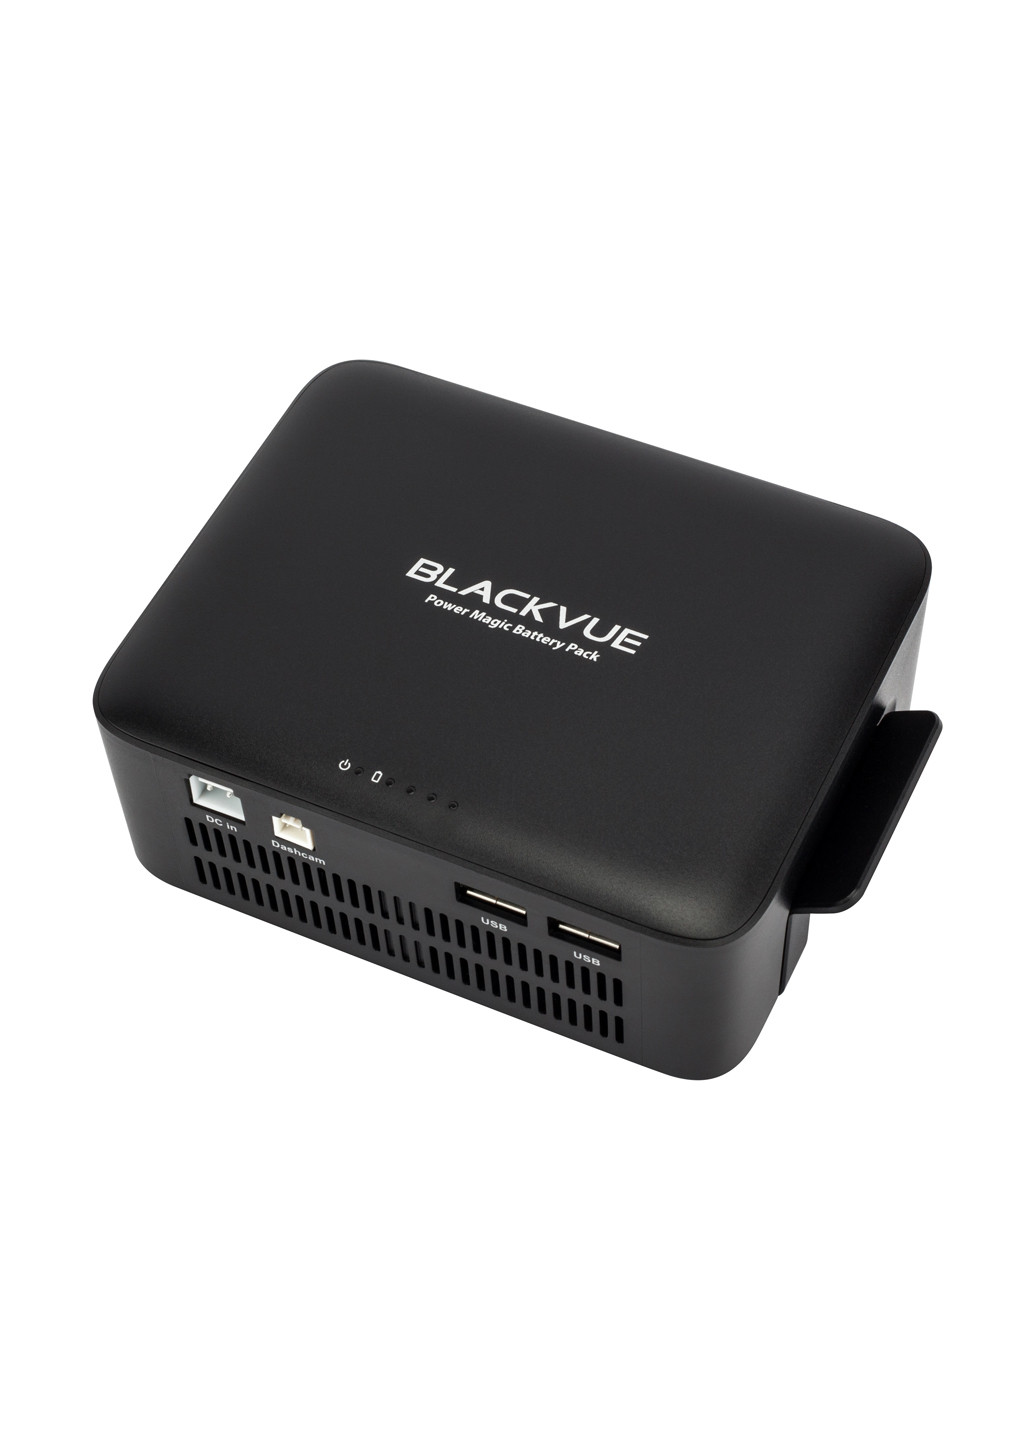 Зарядное устройство Power Magic Battery Pack B-112 BlackVue зарядное устройство power magic battery pack b-112 (148826424)